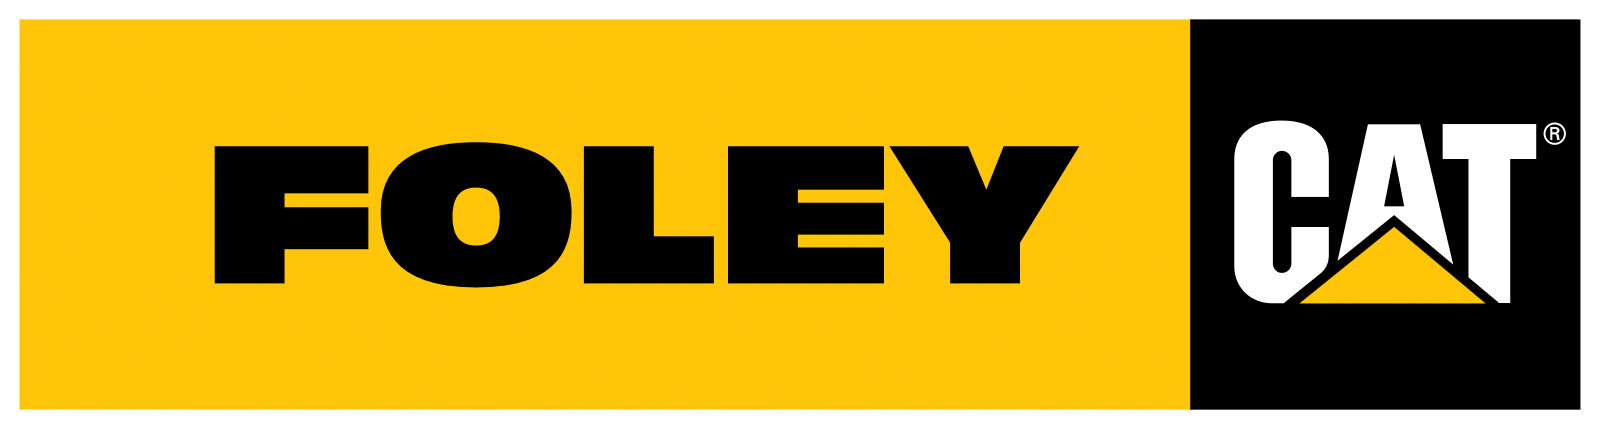 Foley-logo_border.png